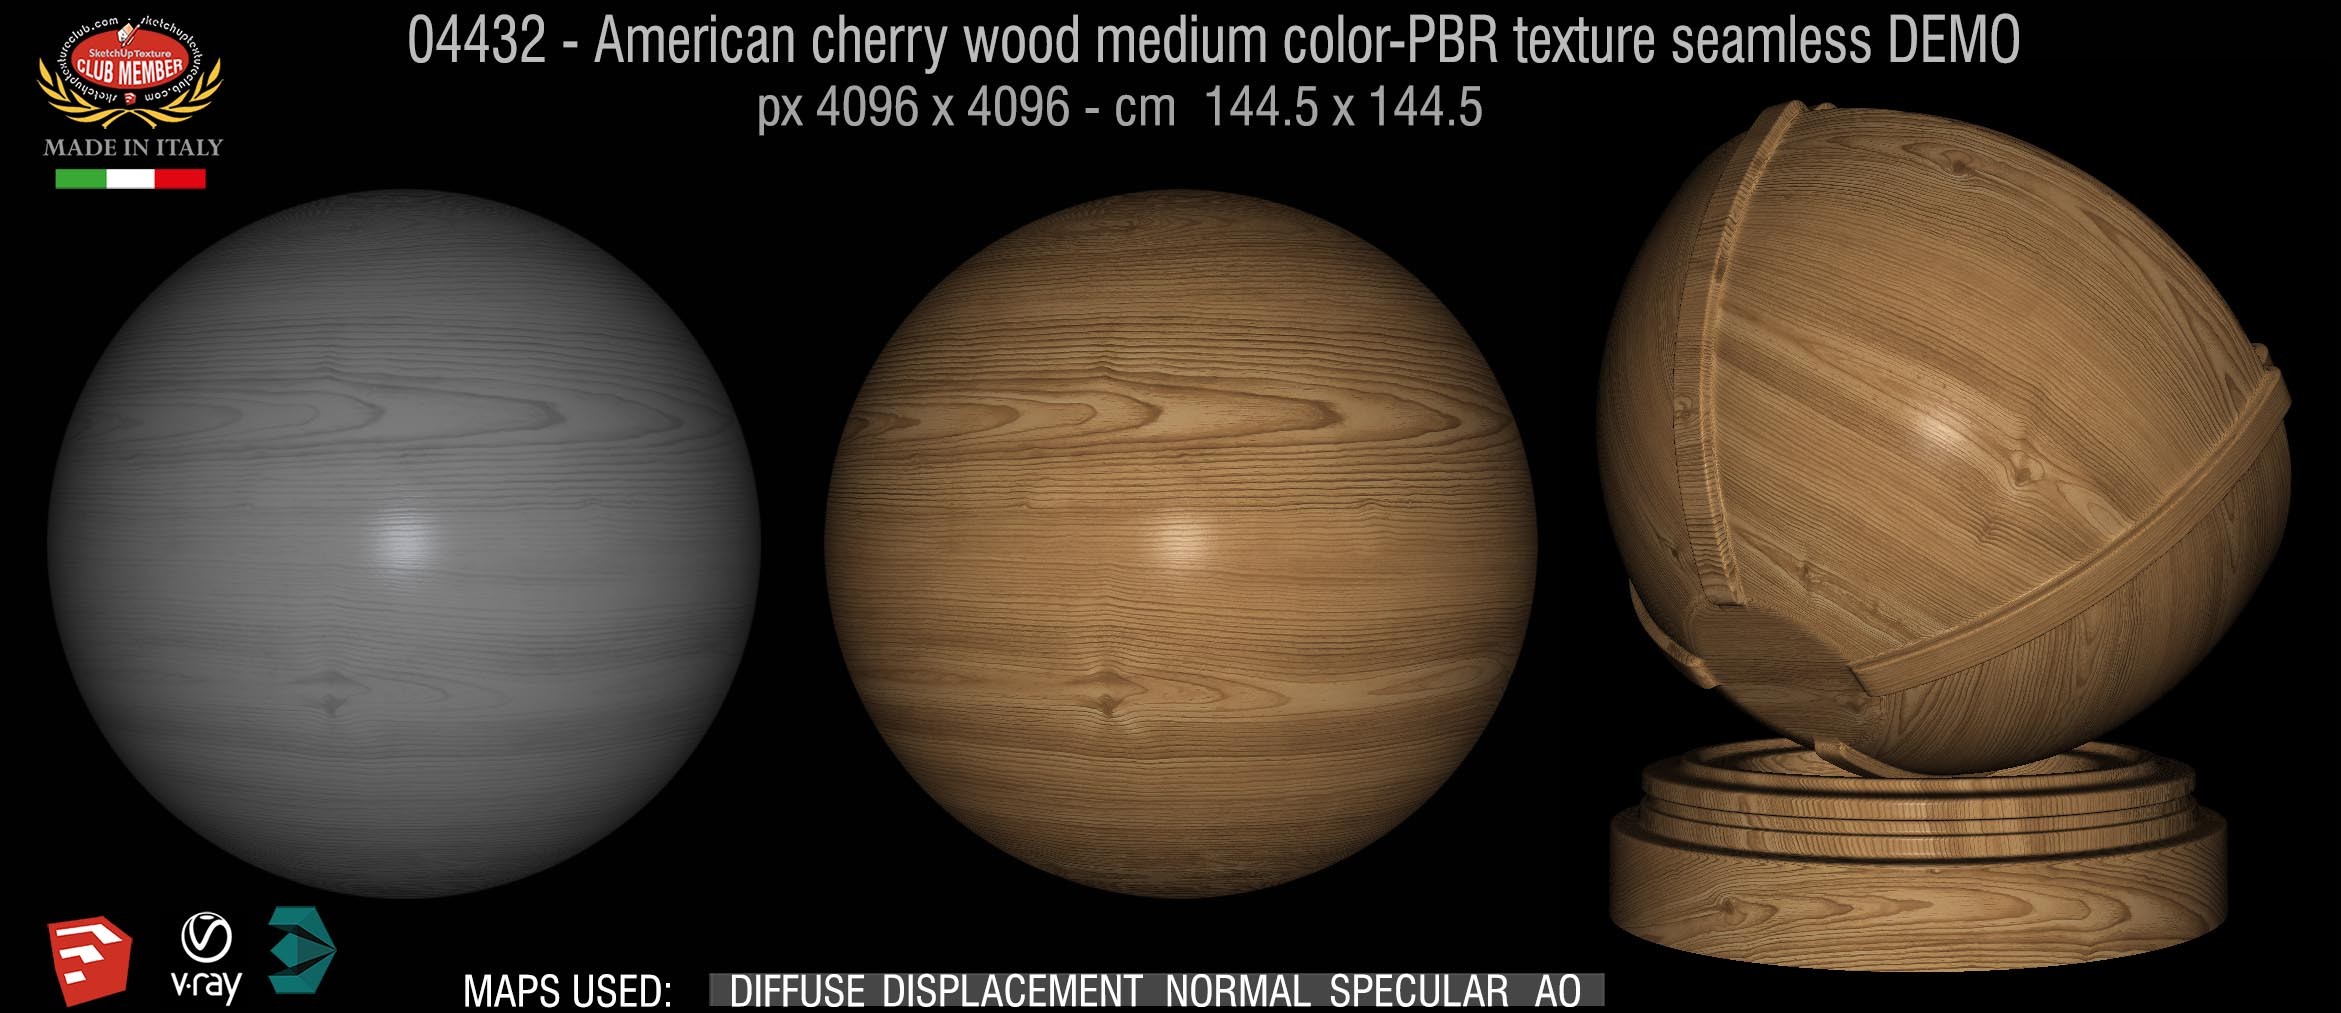 04432 American cherry wood medium color-PBR texture seamless DEMO